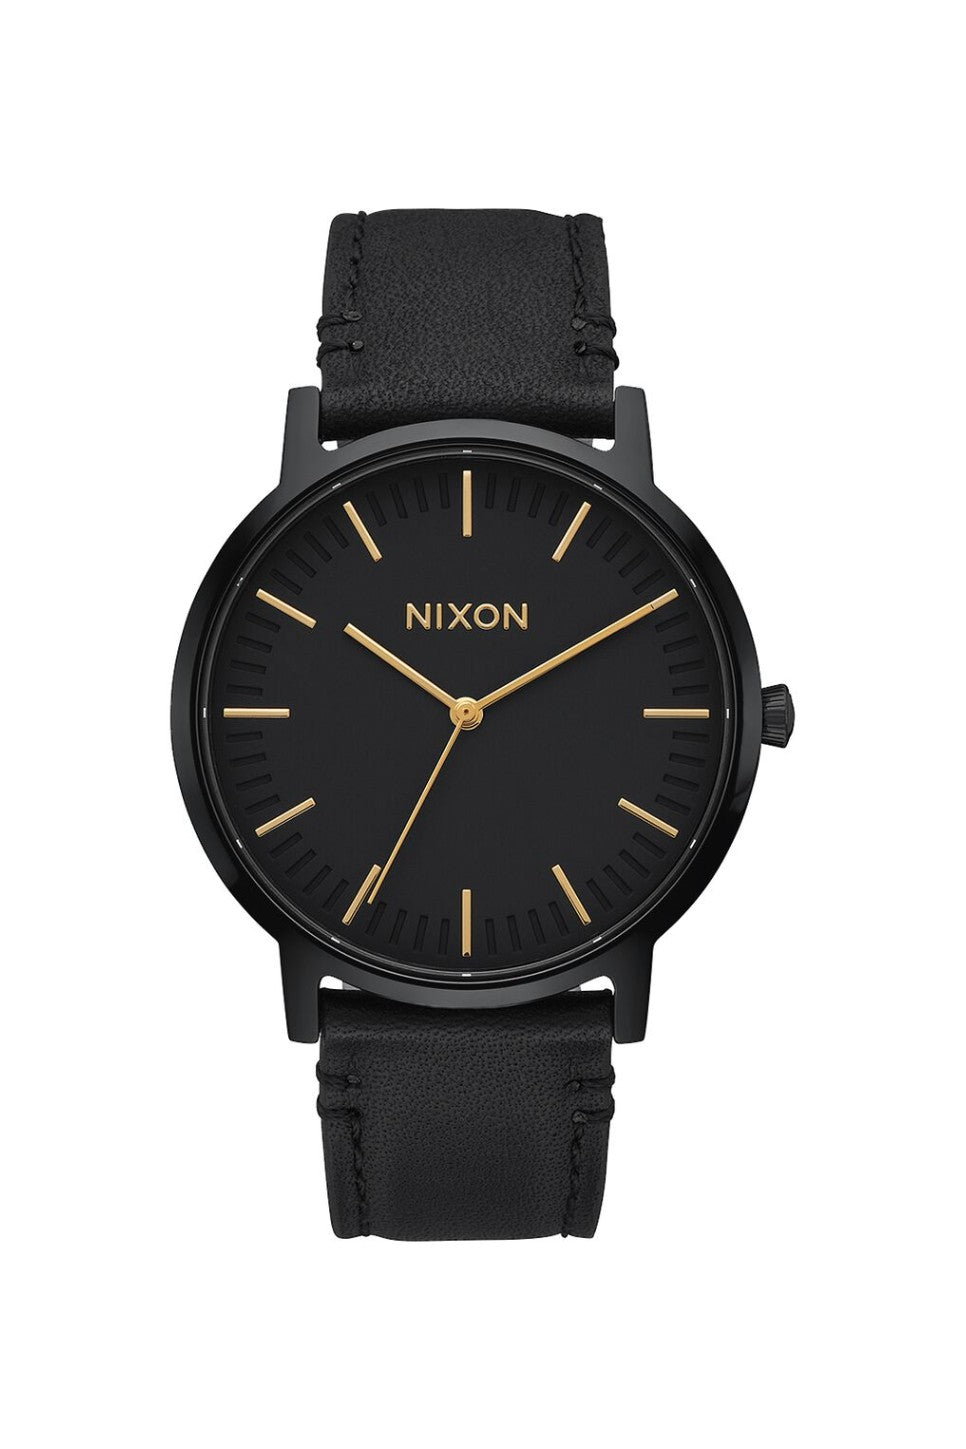 Nixon - Porter Leather - All Black/Gold - Front